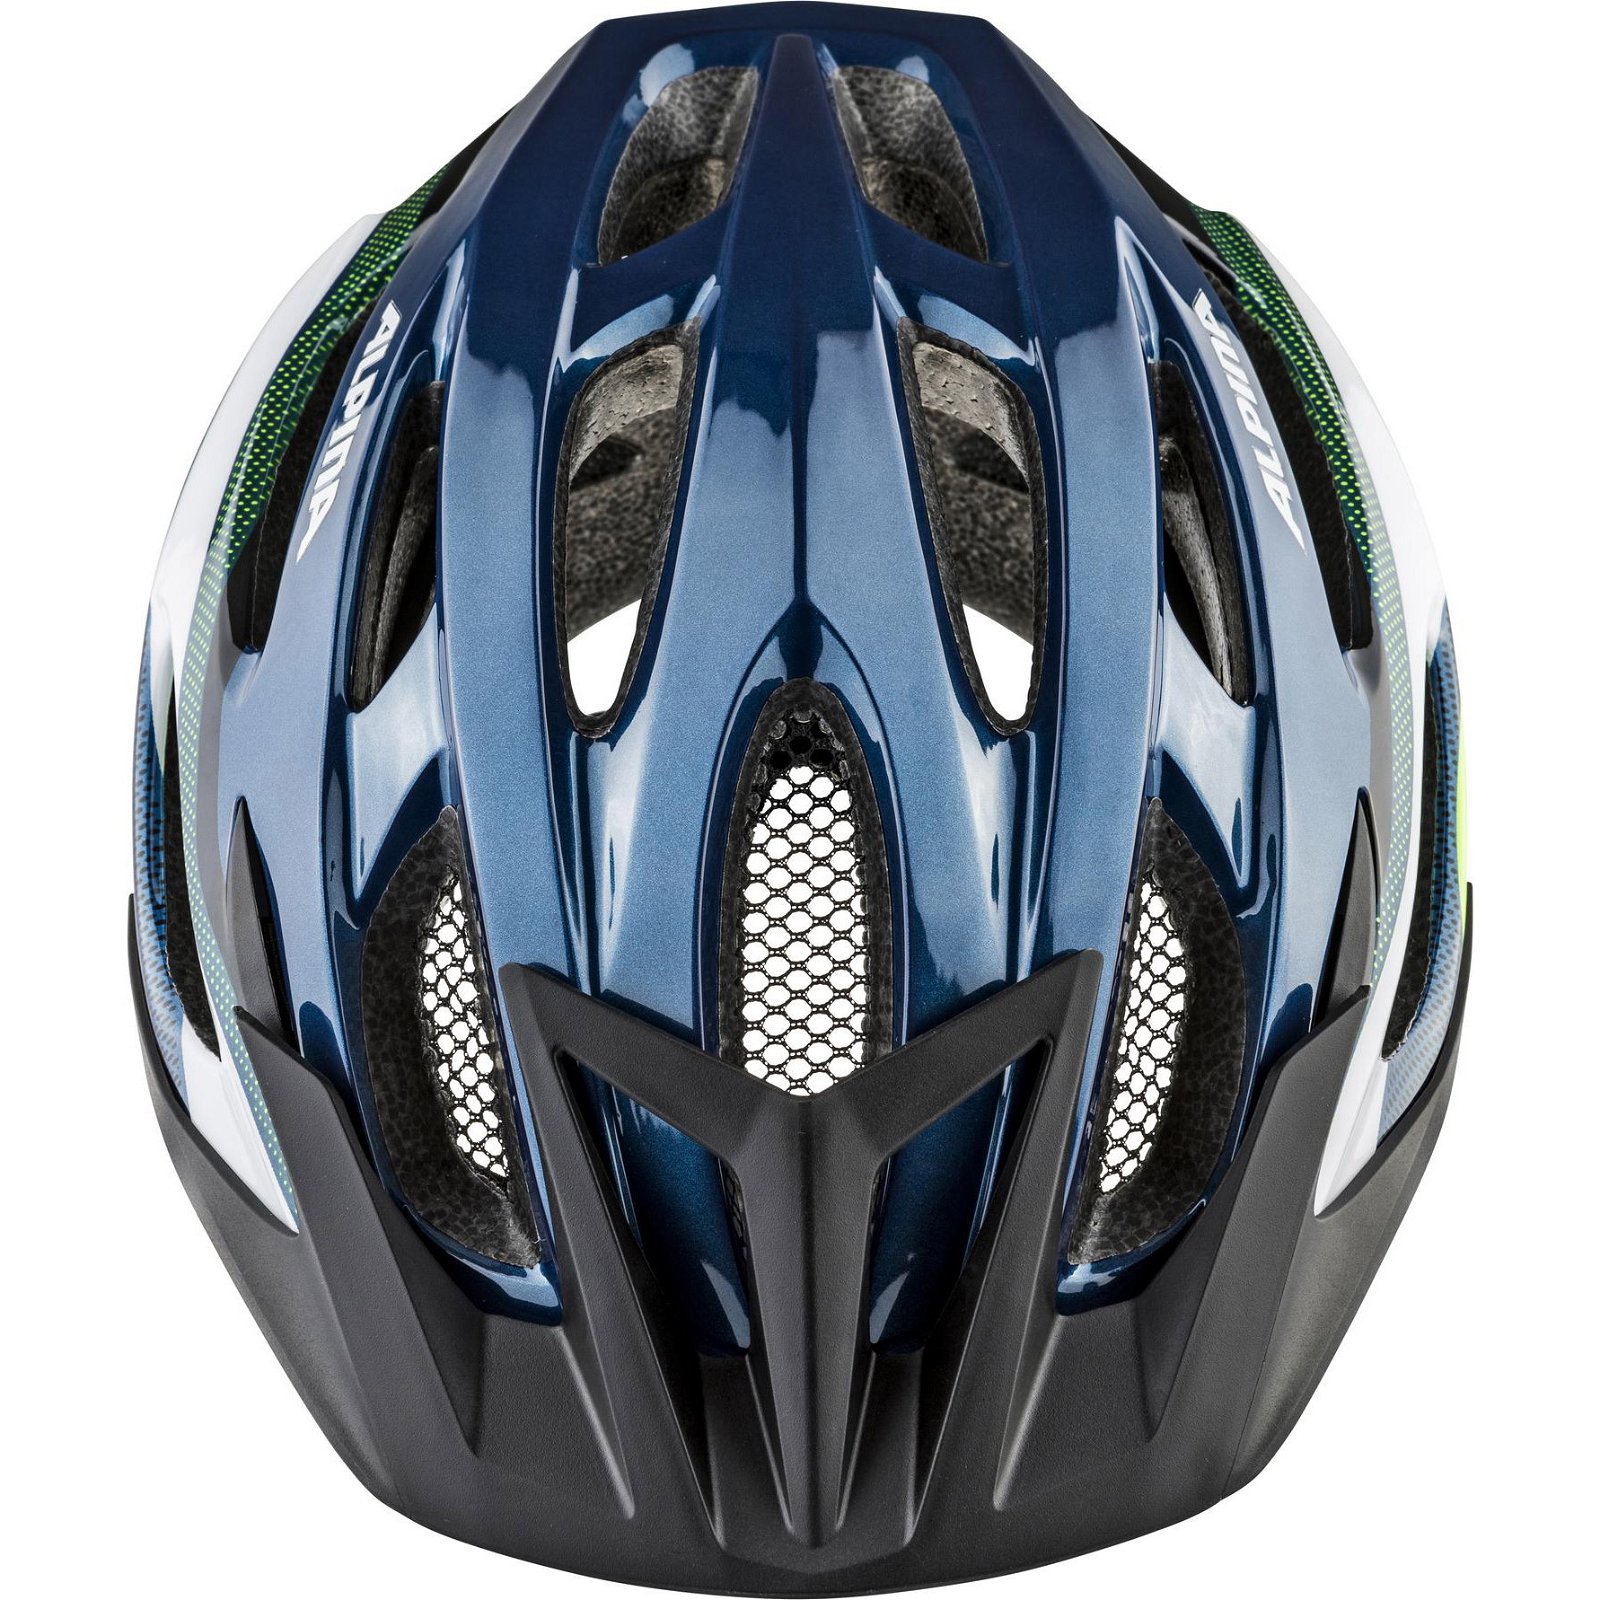 Alpina helm MTB 17 darkblue-neon 